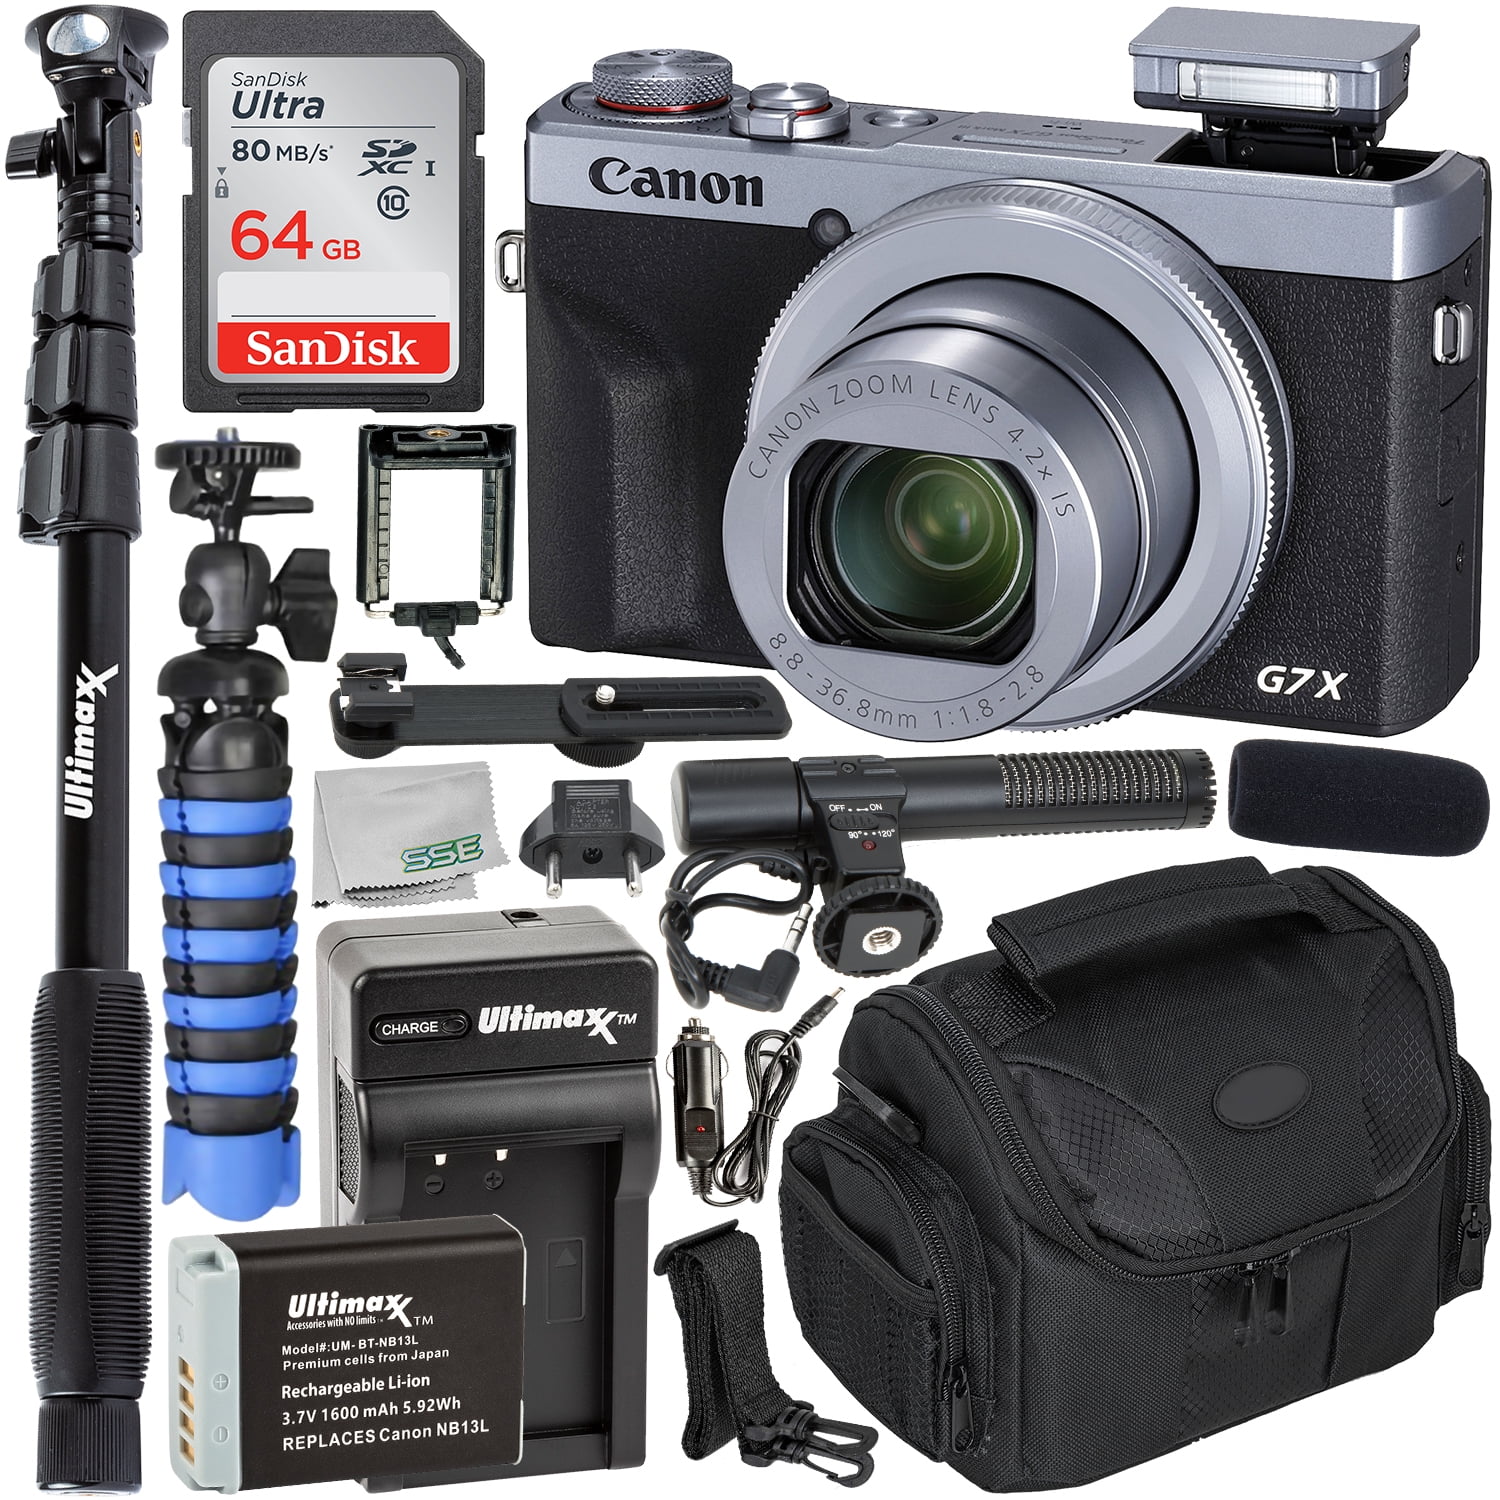  Canon PowerShot Digital Camera [G7 X Mark III] International  Model - Silver : Electronics